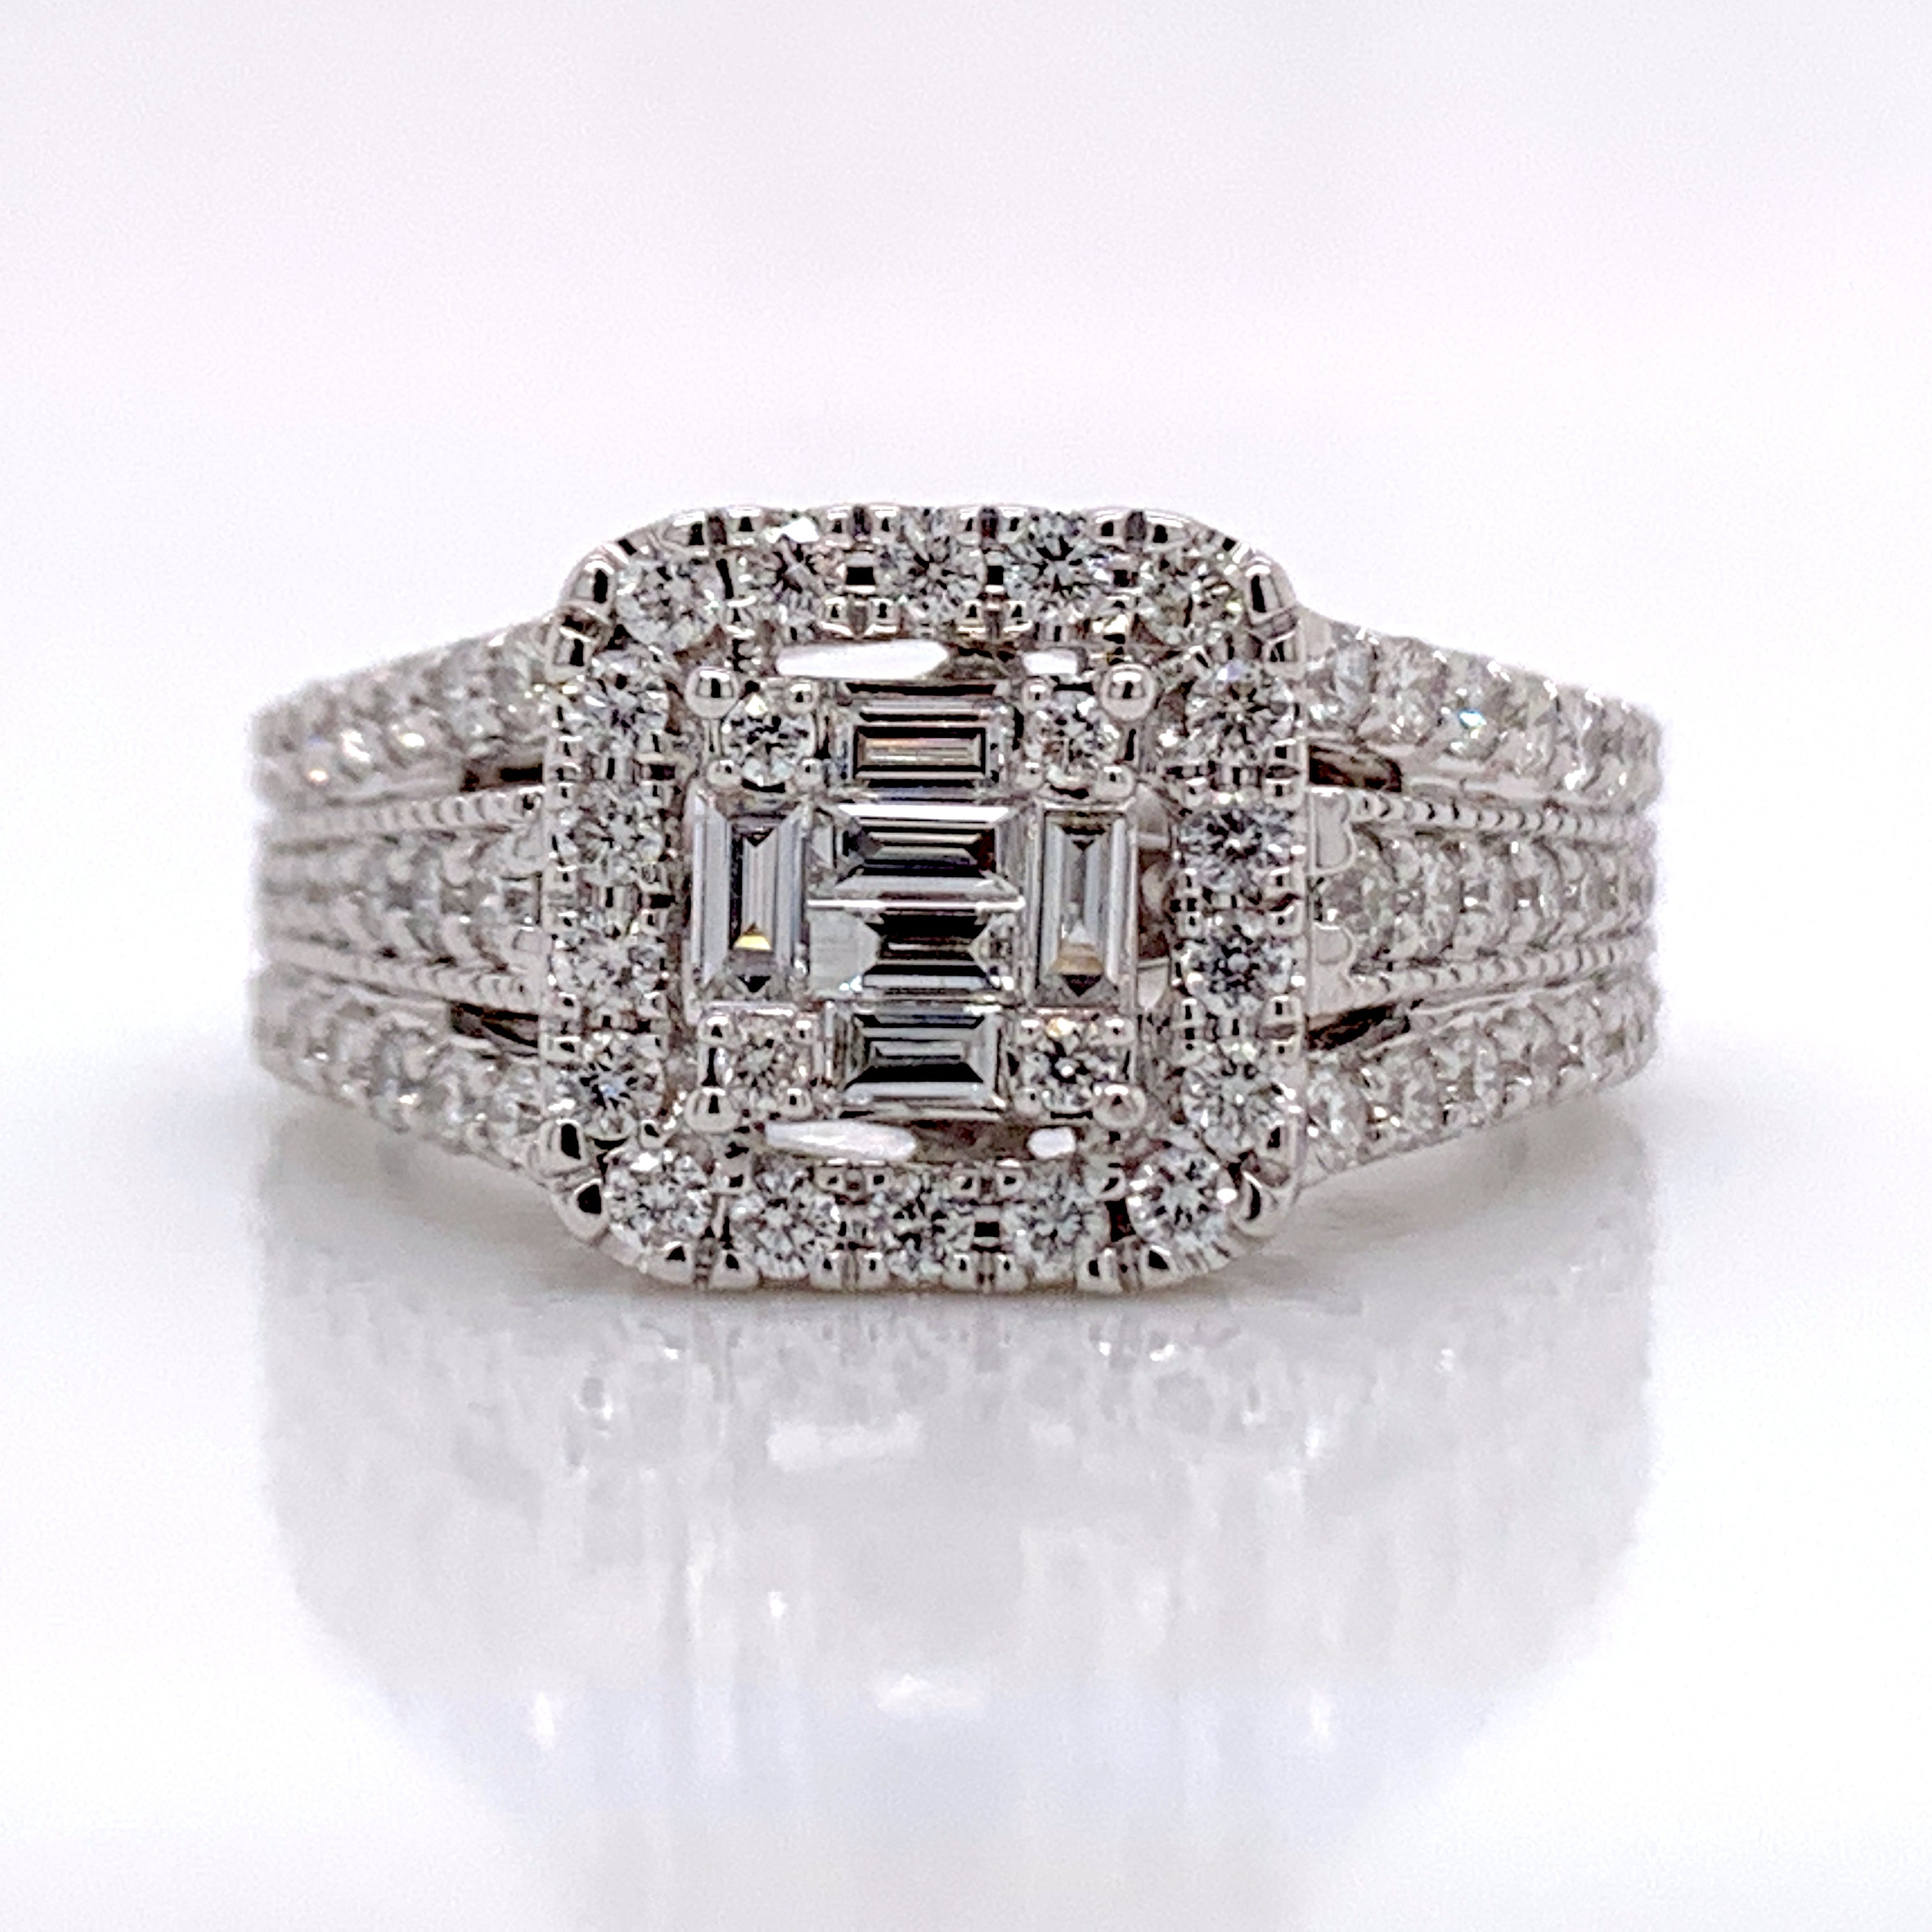 1.25CT Diamond Engagement Ring in 14K White Gold - White Carat Diamonds 